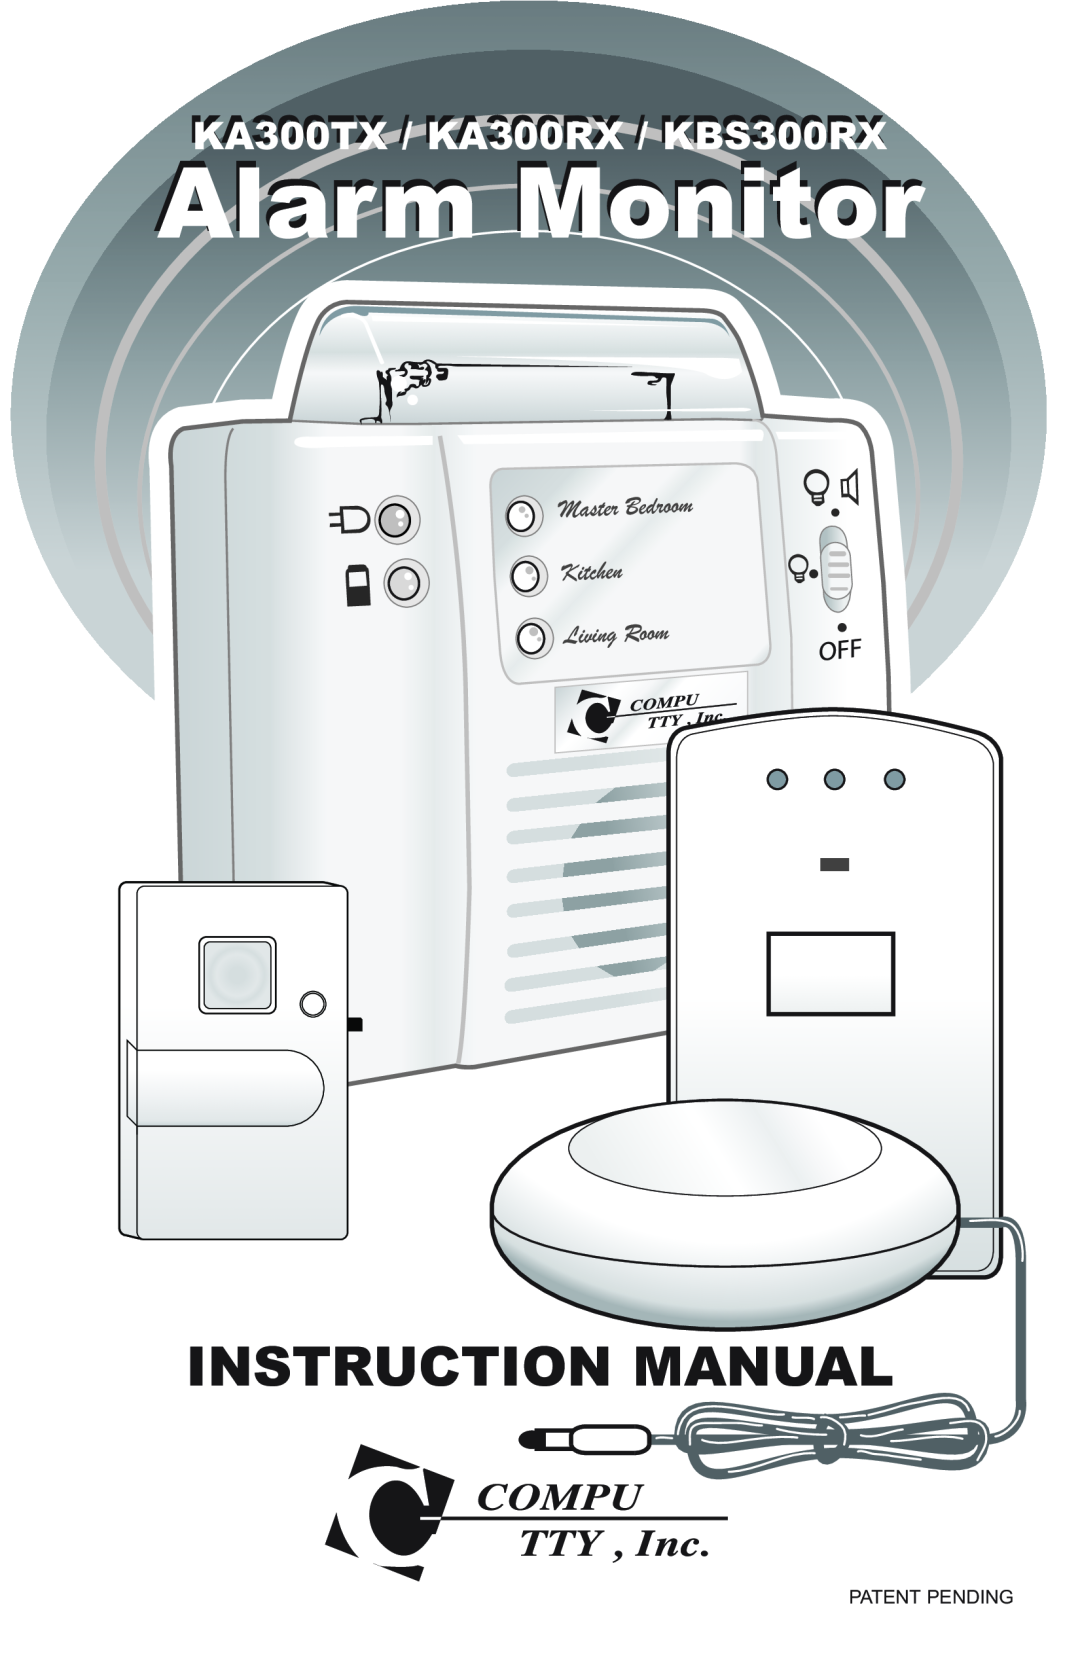 Krown Manufacturing instruction manual Alarm Monitor, KA300TX // KA300RX // KBS300RX 